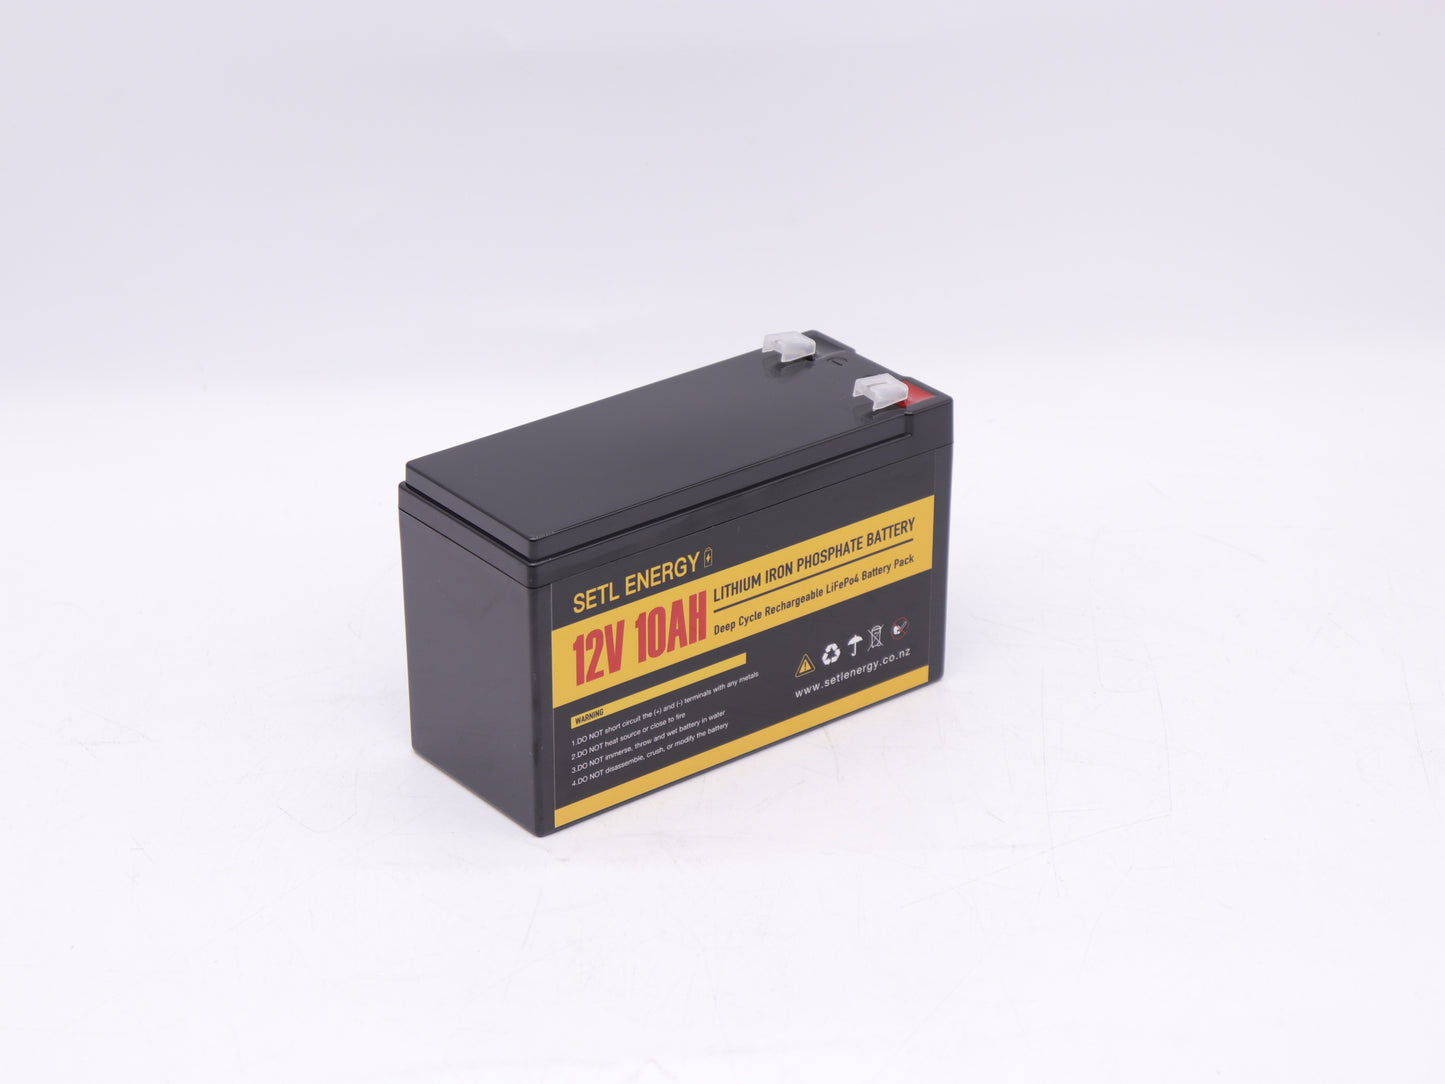 Lithium Phosphate Battery (LiFePo4) 12v 100Ah 106Ah Bluetooth Version